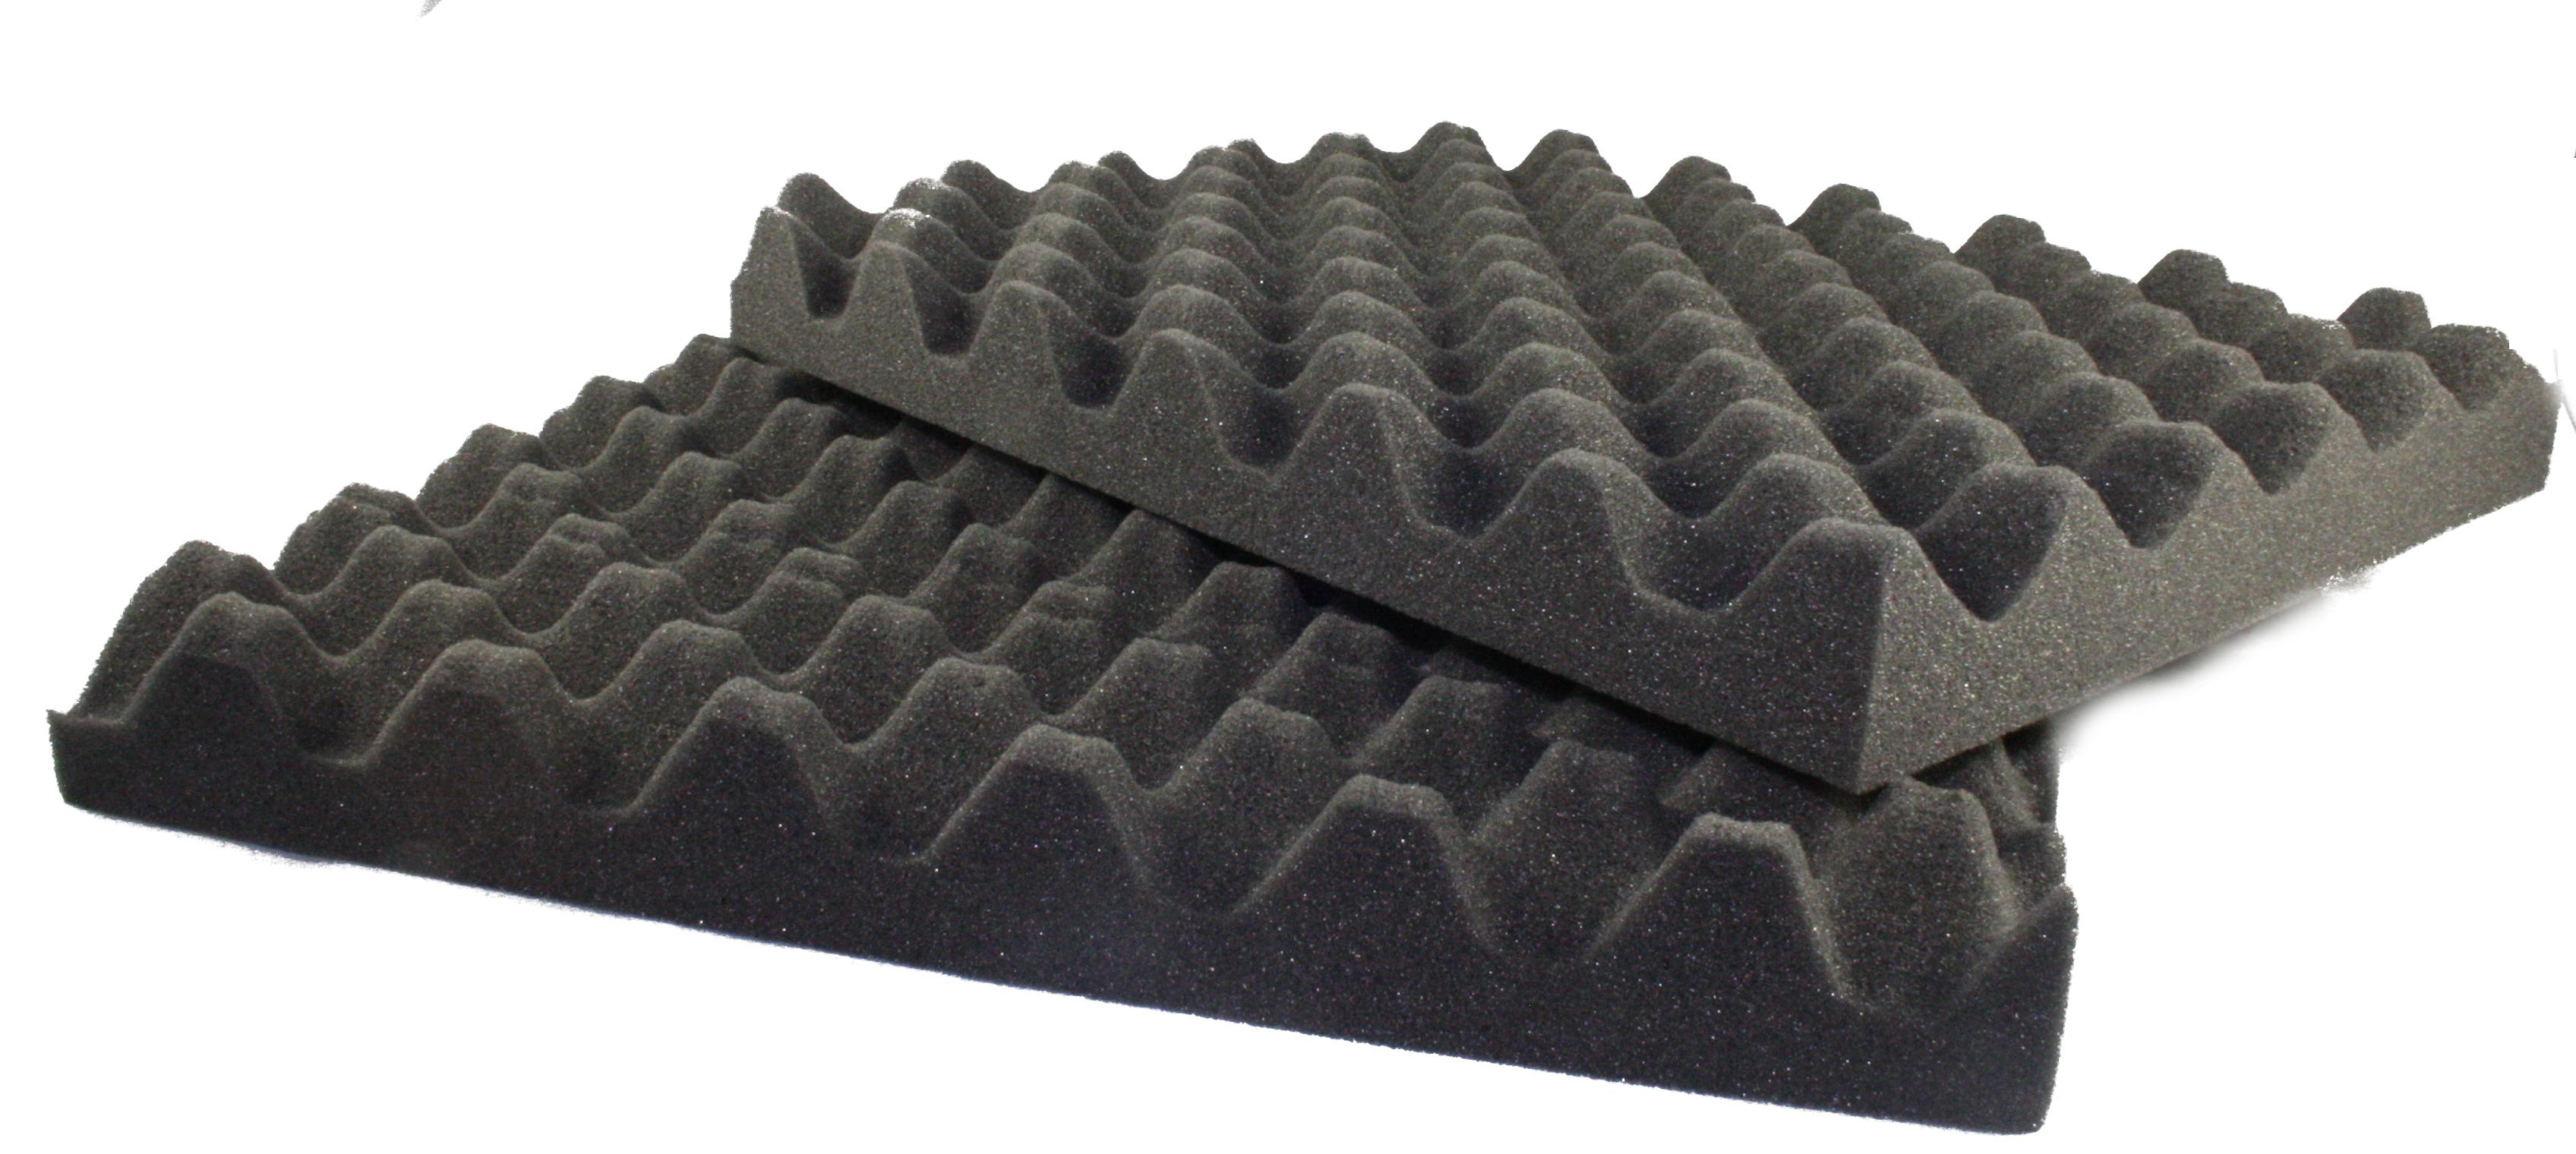 egg shell foam mattress pad